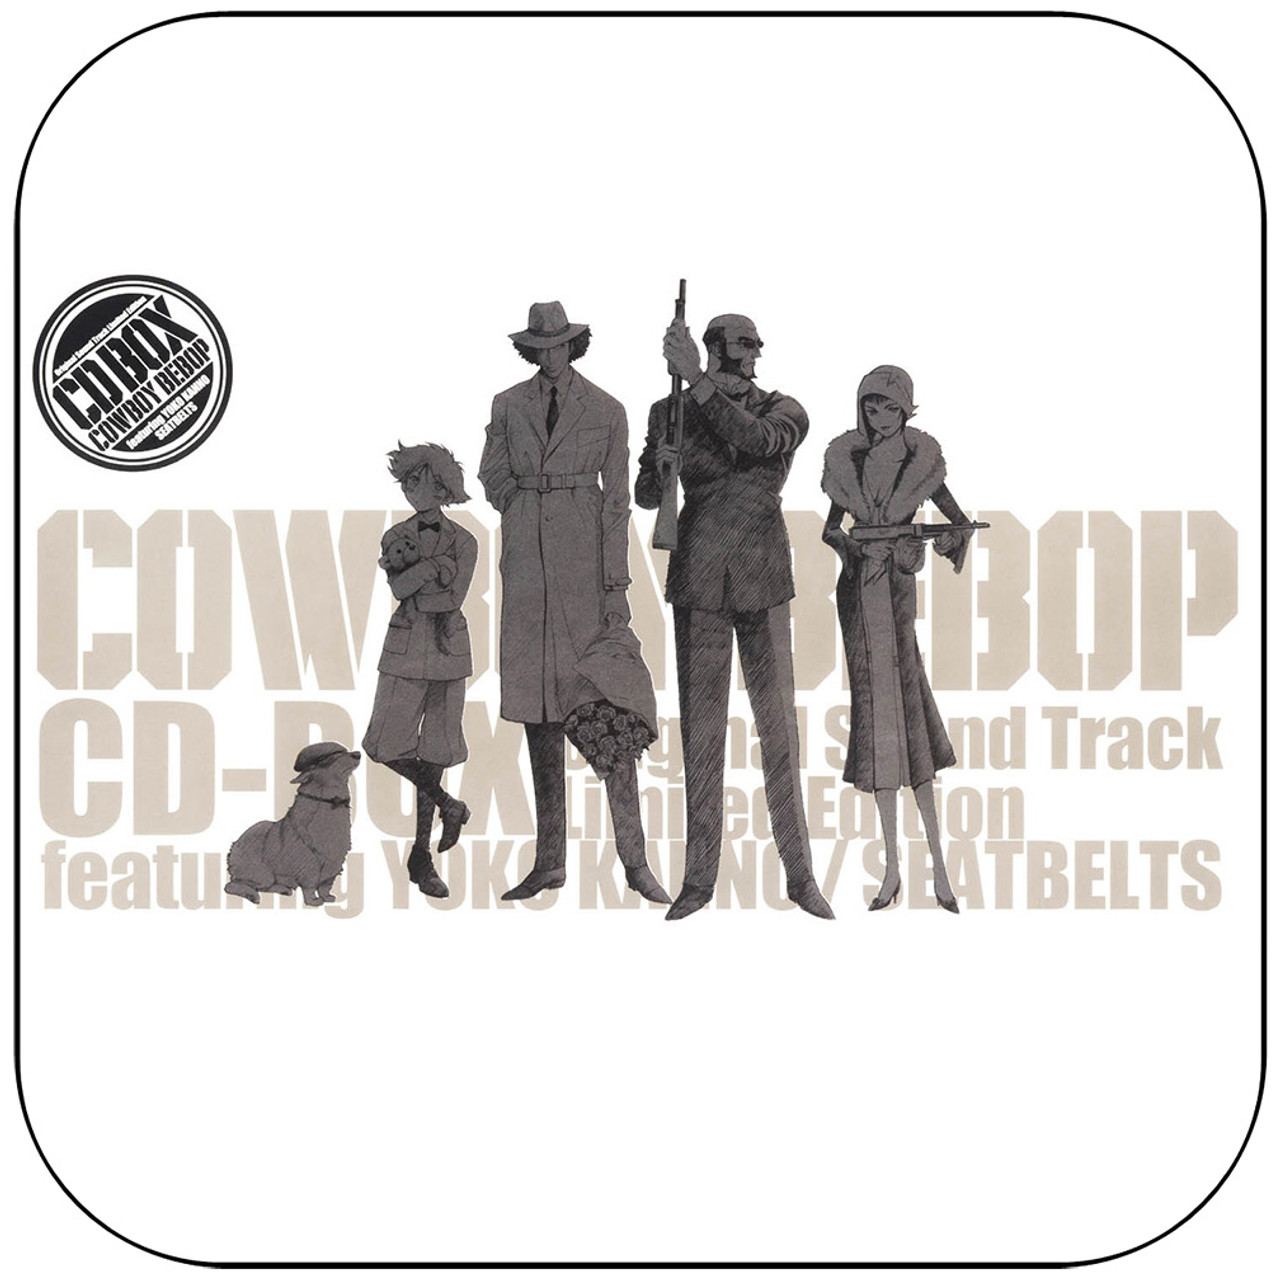 The Seatbelts Cowboy Bebop Cd Box Album Cover Sticker